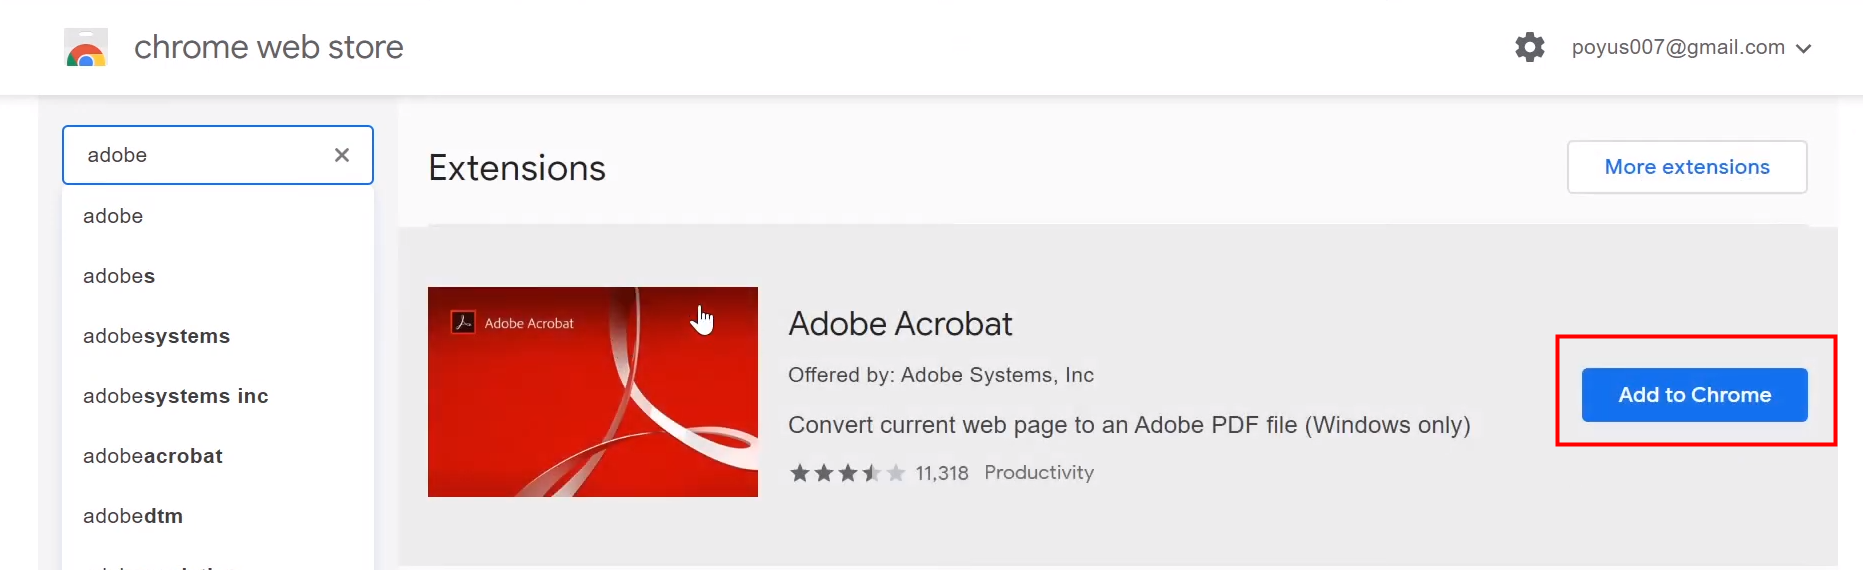 Make Adobe default PDF viewer in Chrome 1